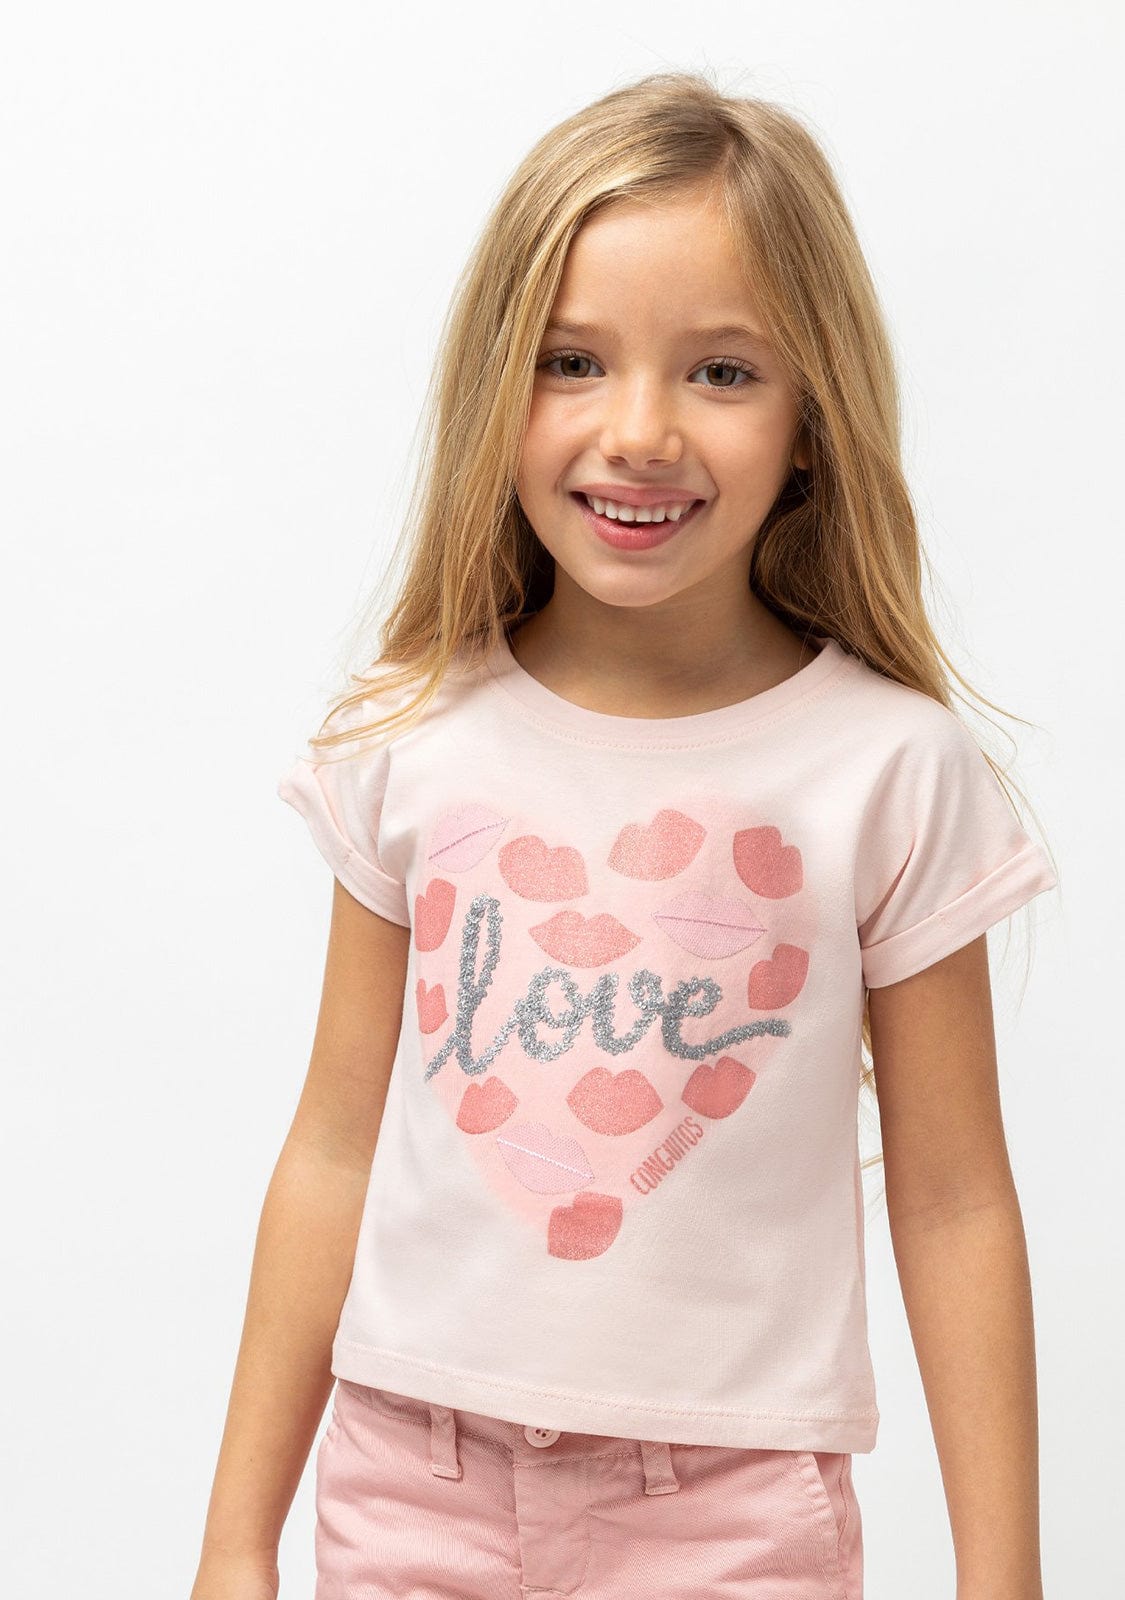 CONGUITOS TEXTIL Clothing Girl's "Love Kiss" Pink T-Shirt